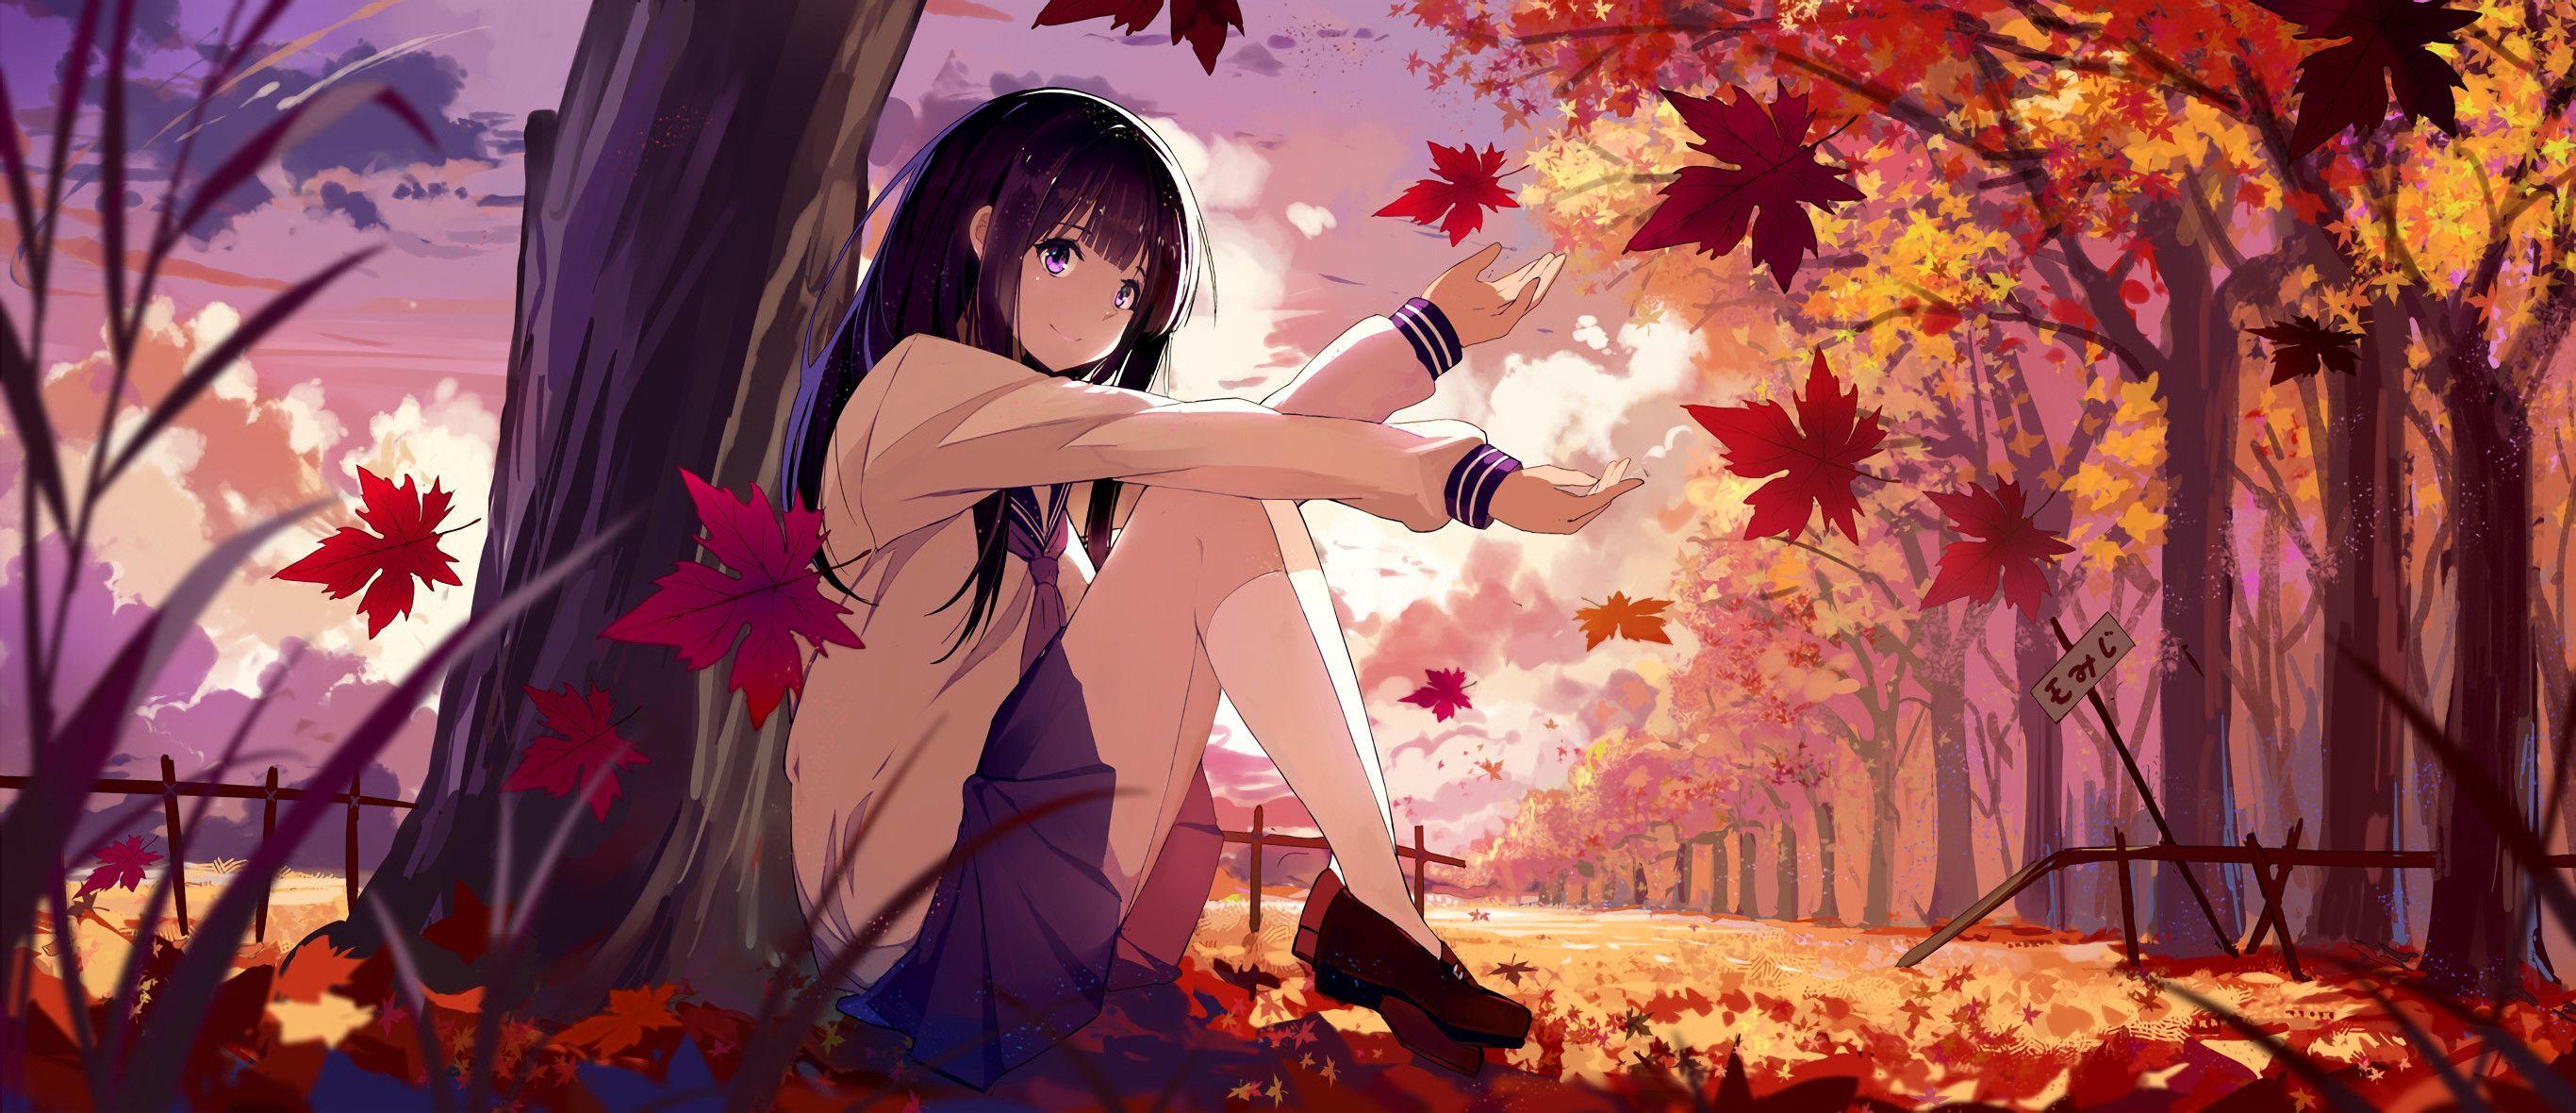 Download wallpaper 3840x2400 girl kimono pagoda autumn anime art 4k  ultra hd 1610 hd background